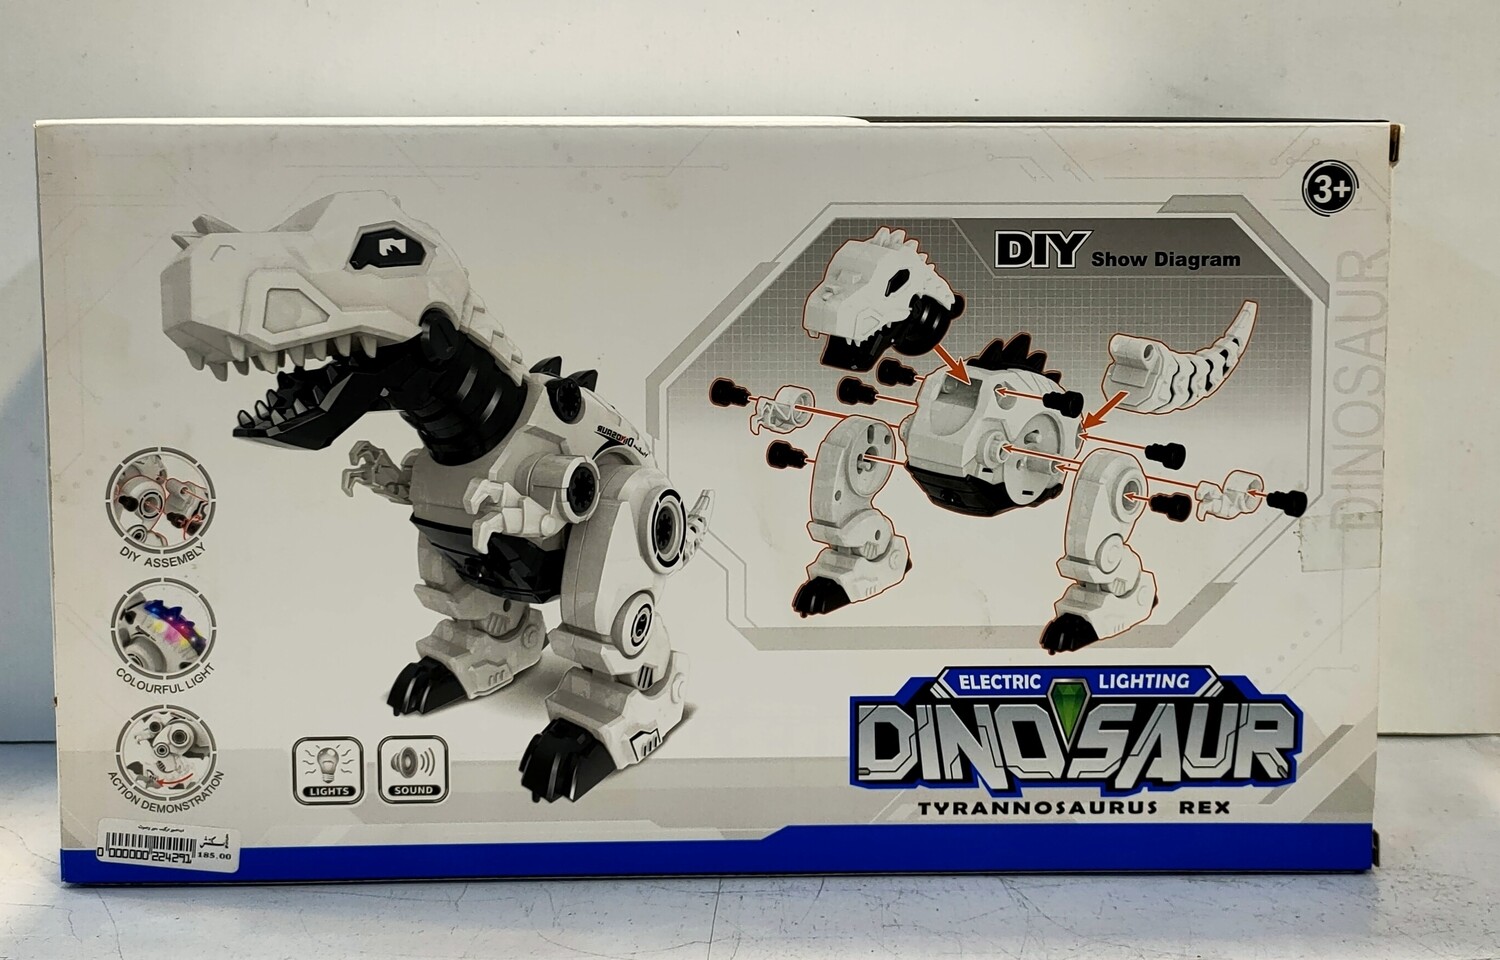 Electric lighting dinosaur Tyrannosaurus rex